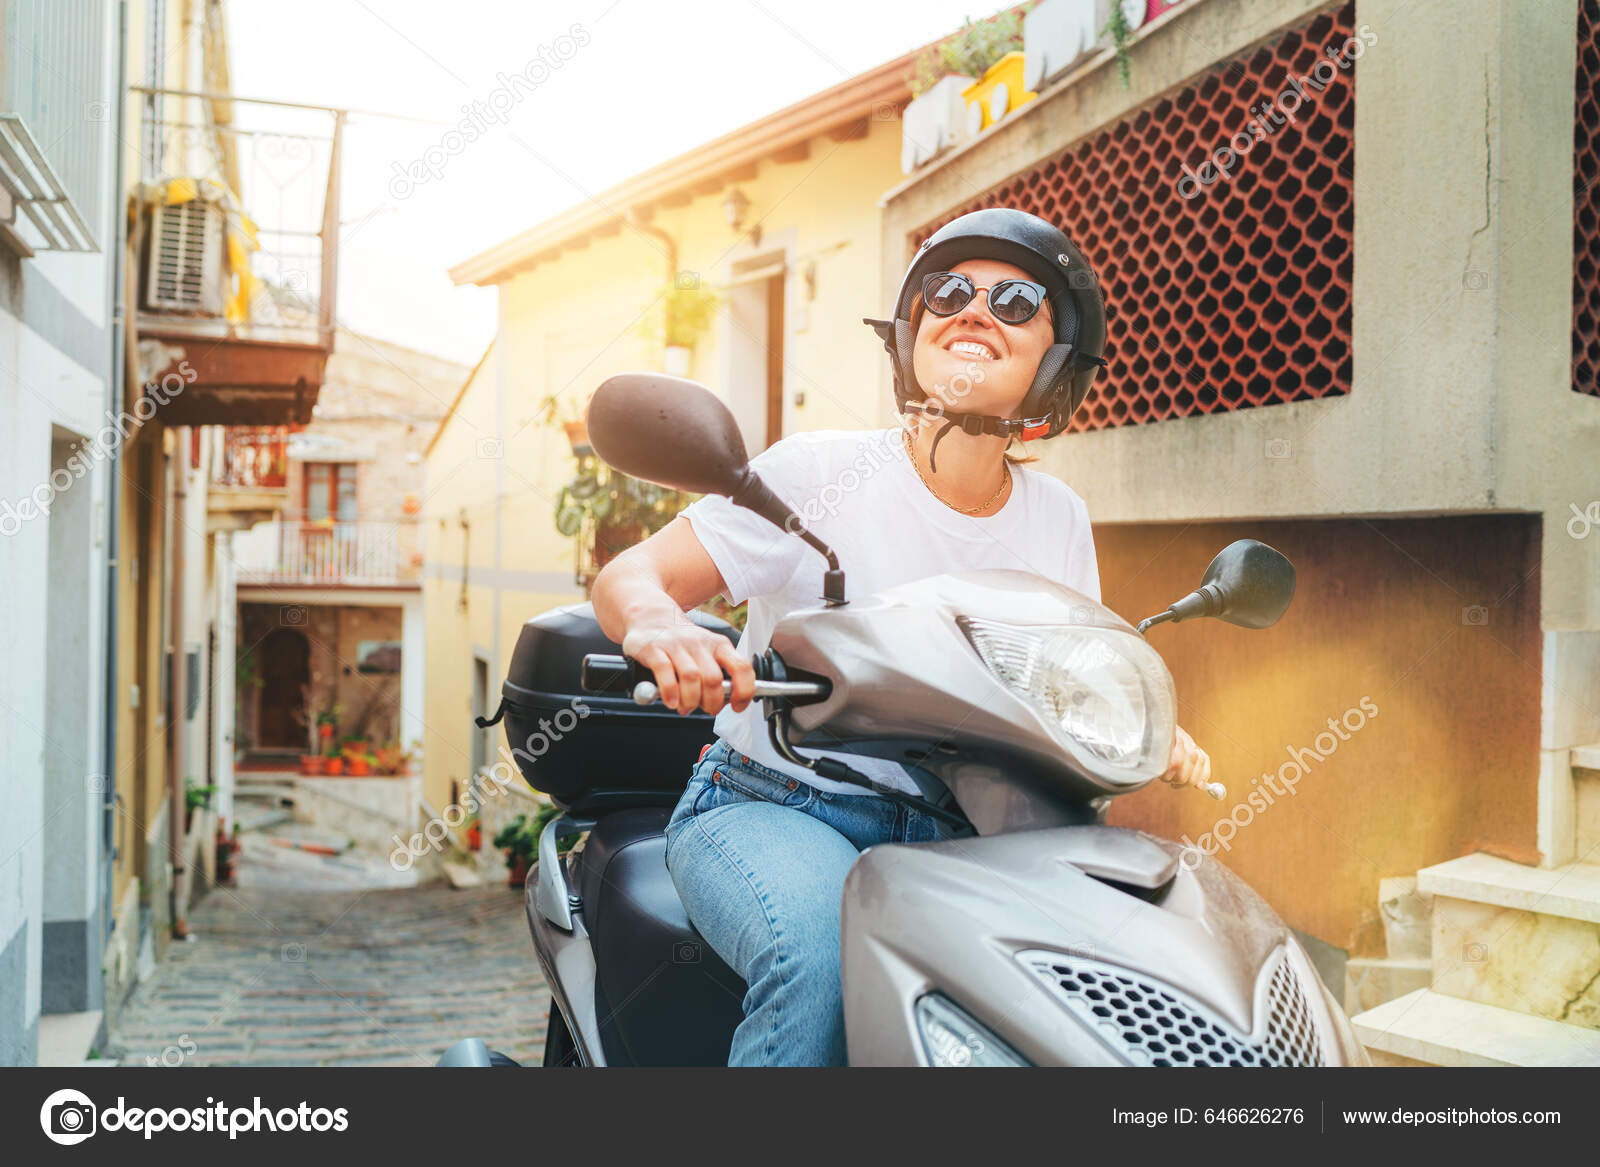 depositphotos 646626276 stock photo cheerfully smiling woman helmet sunglasses